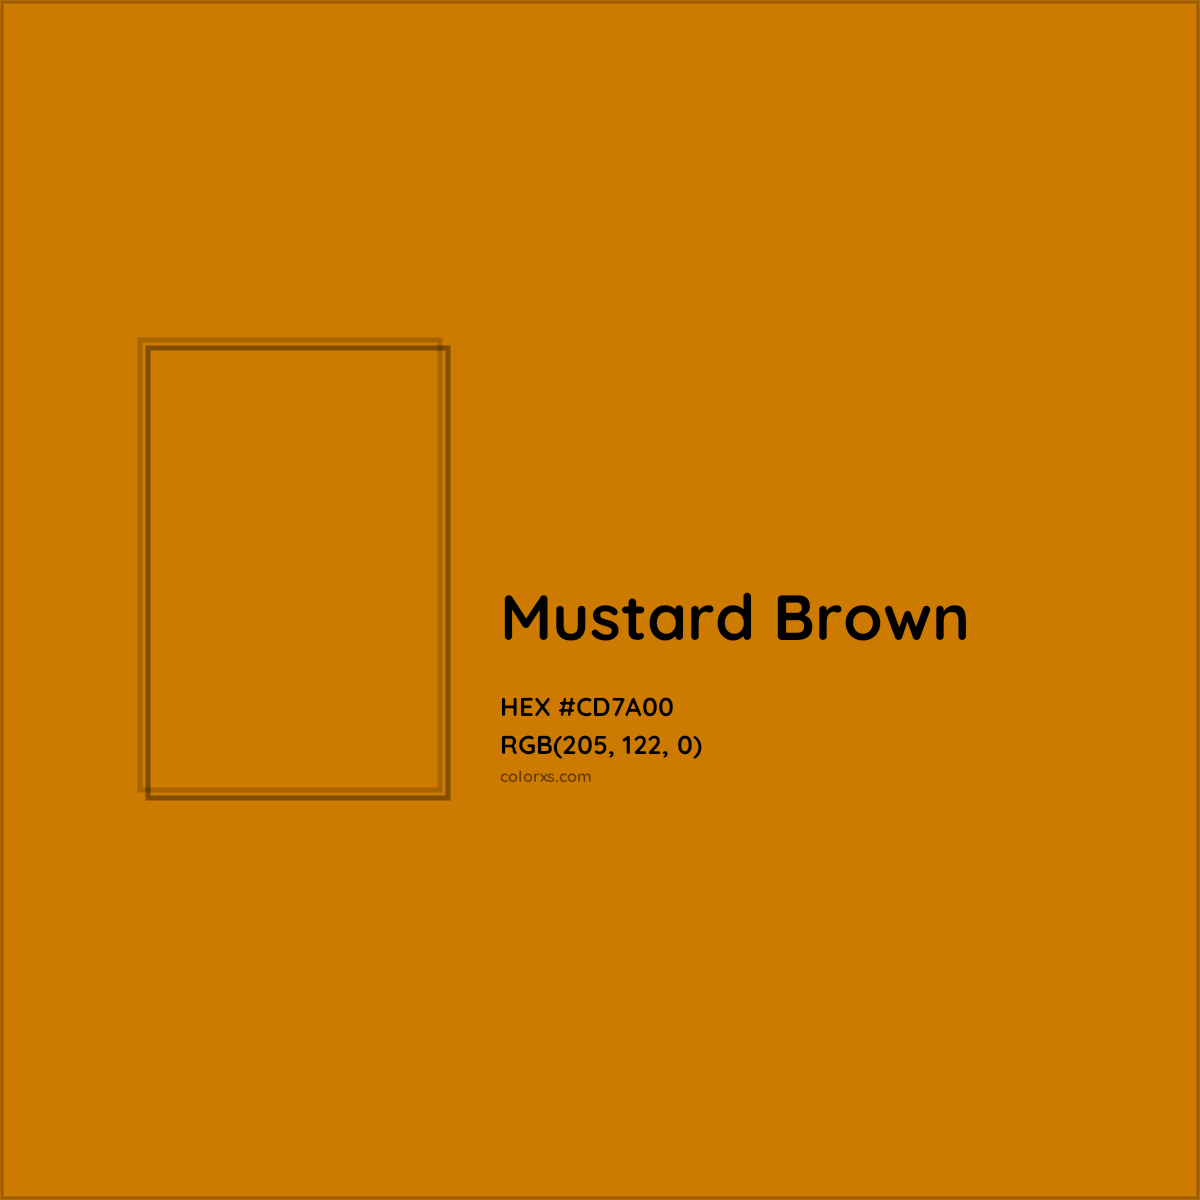 HEX #CD7A00 Mustard Brown Color - Color Code